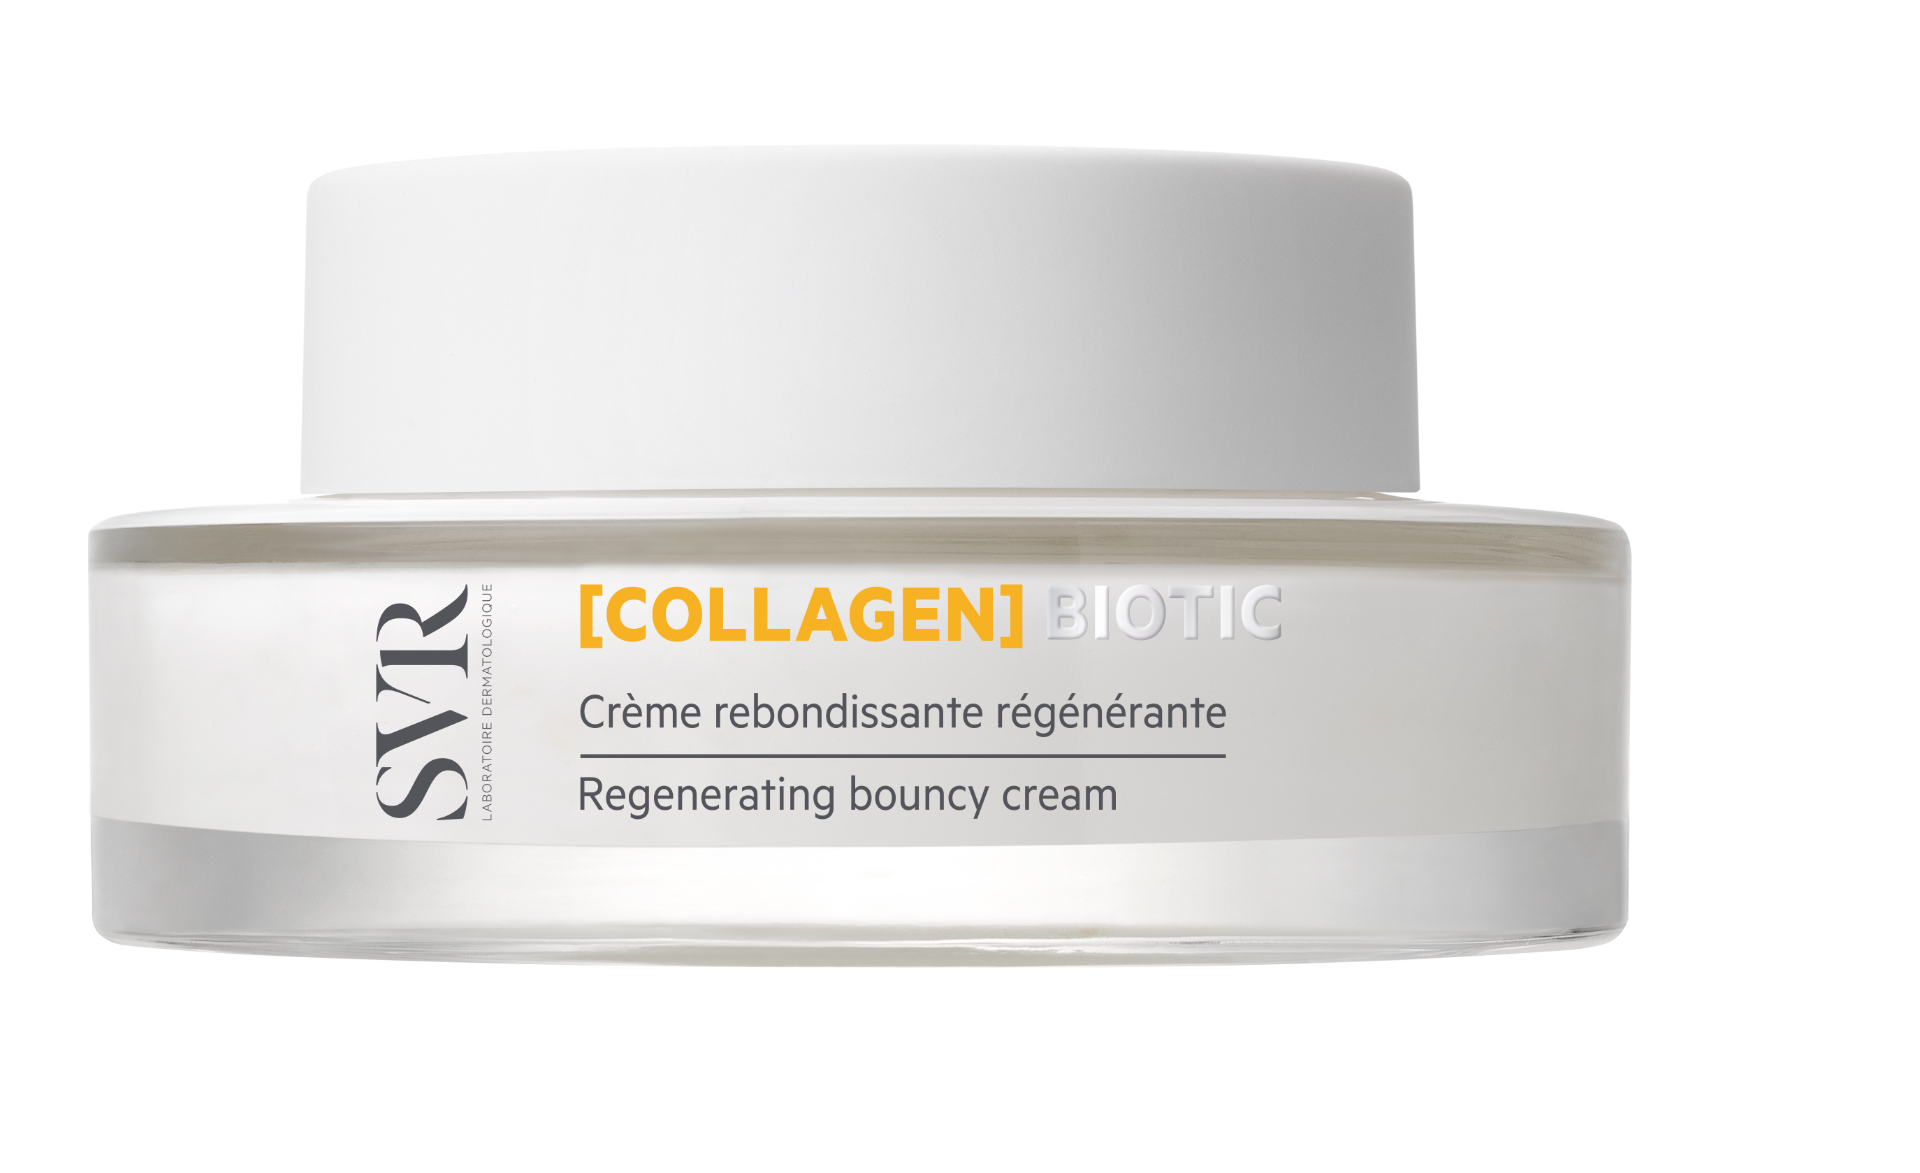 SVR Collagene Biotic дневной крем против морщин, 50 ml цена и фото